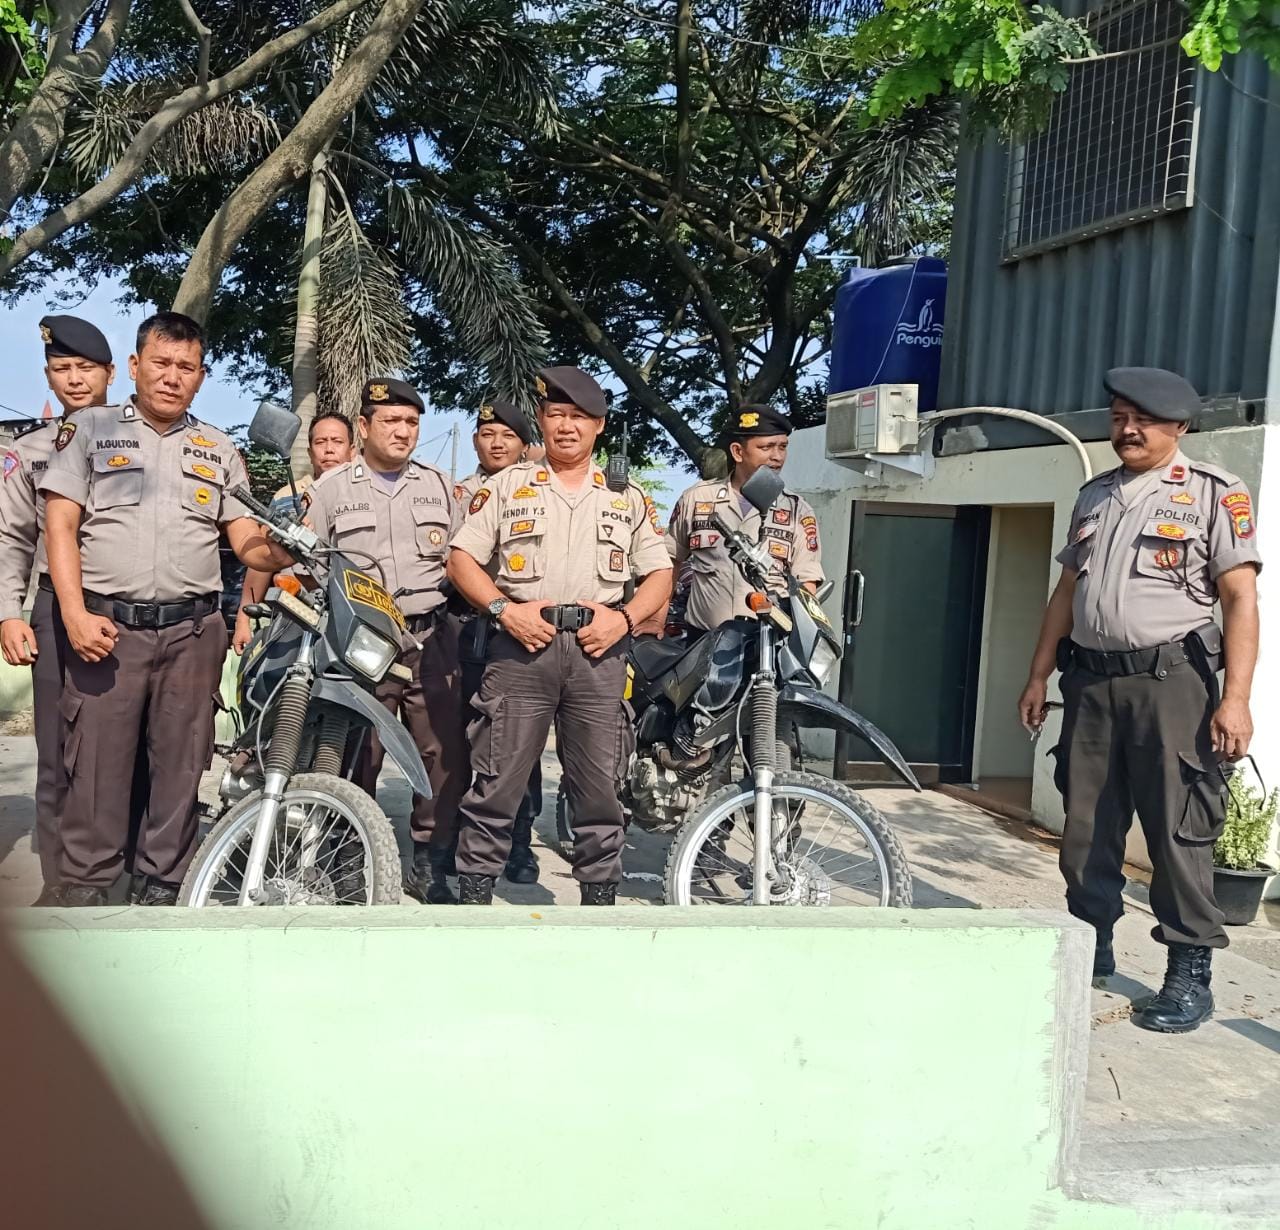 Pos Polisi Simpang Buaya Kampung Salam Aktip,Kemacetan Dan Tindakan Kejahatan Jalanan Tidak Ada Lagi